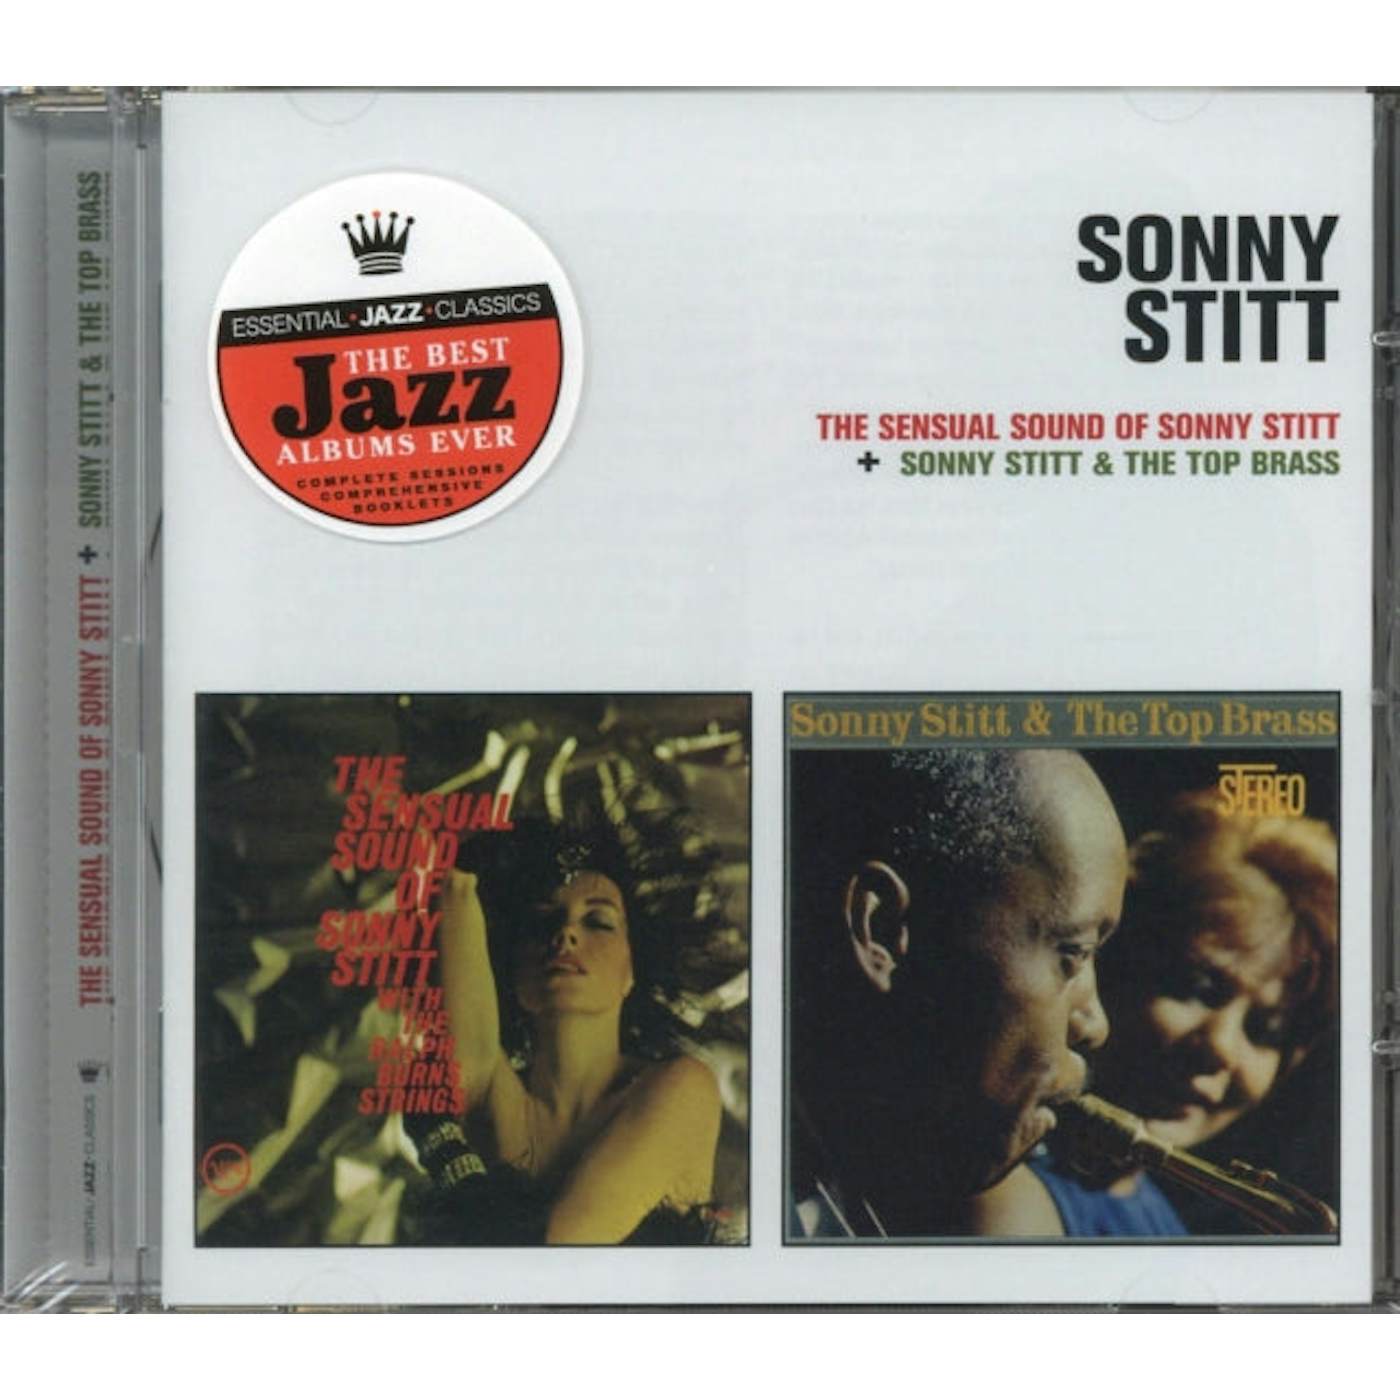 Sonny Stitt CD - The Sensual Sound Of Sonny Stitt / Sonny Stitt & The Top Brass